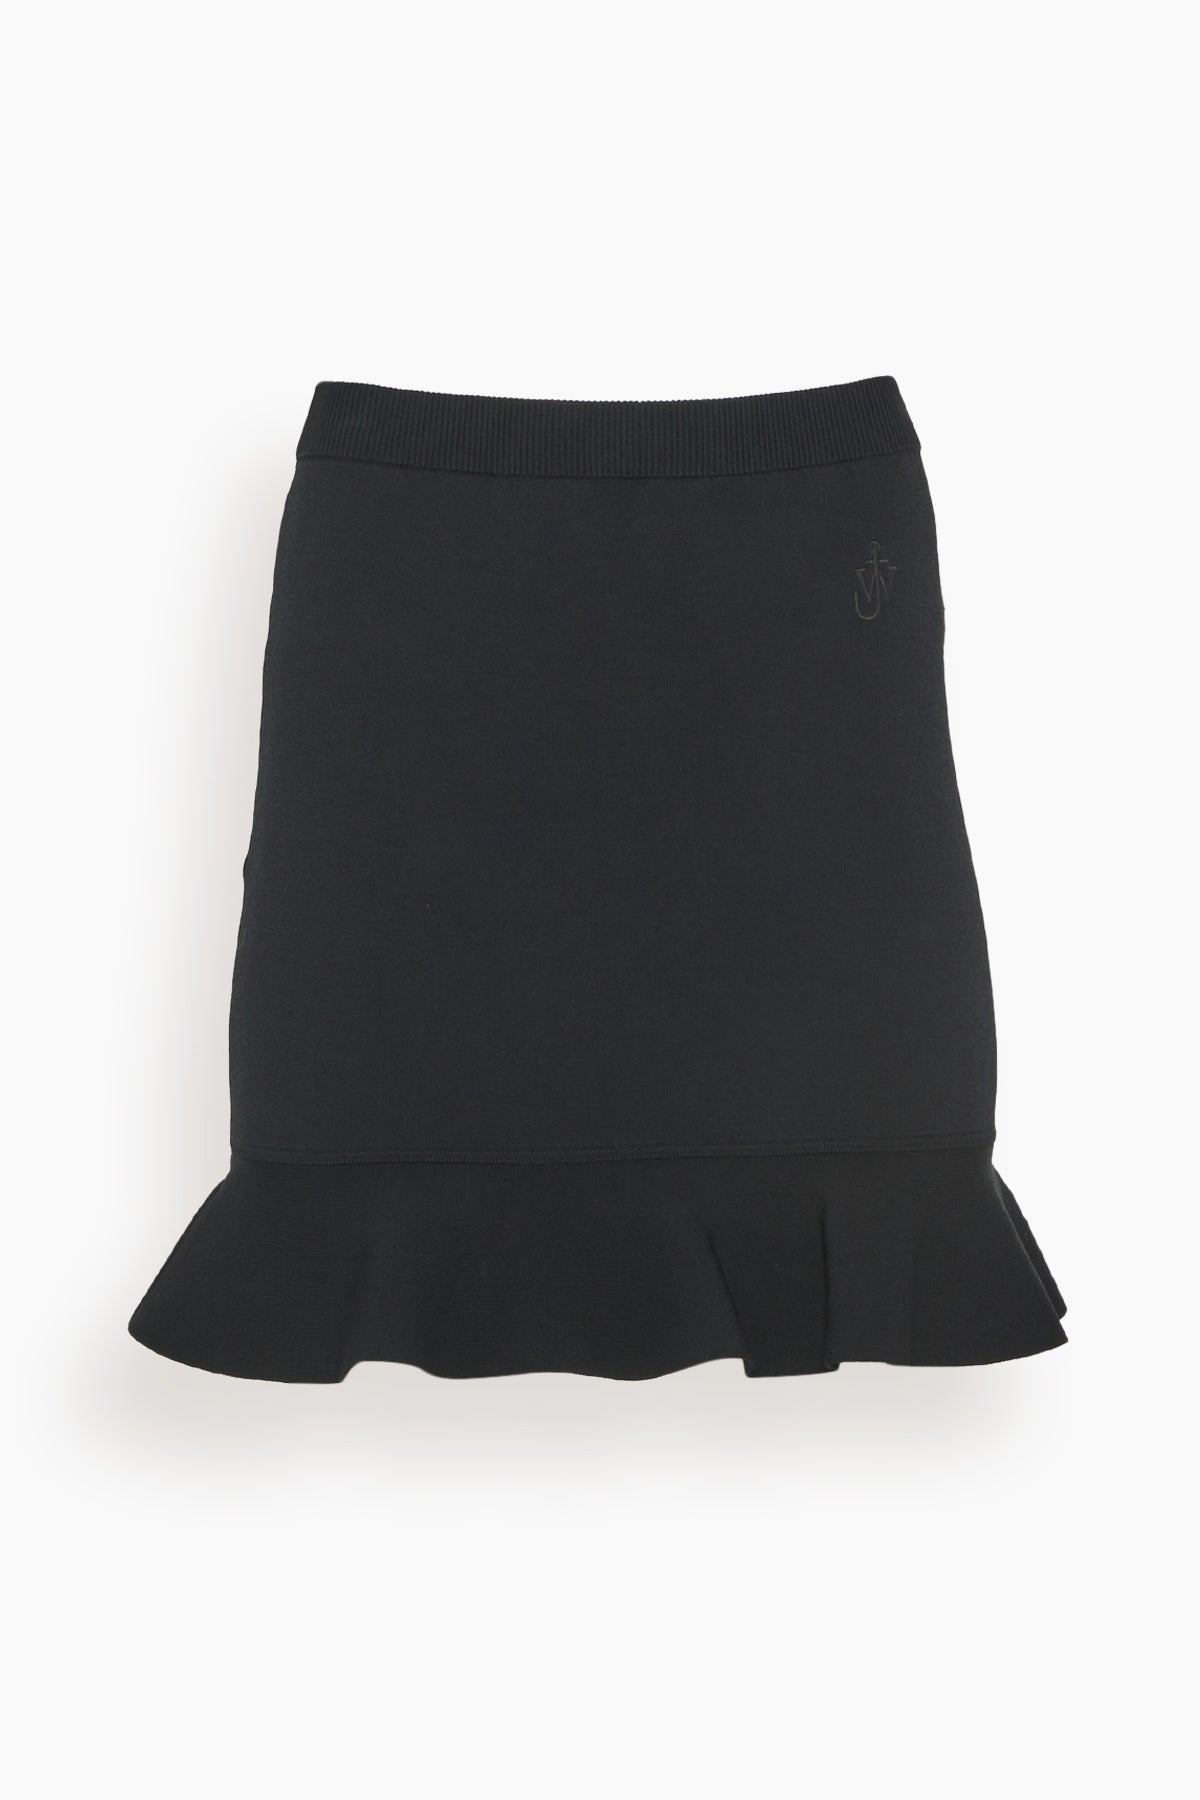 JW Anderson Skirts Ruffled Hem Mini Skirt in Black